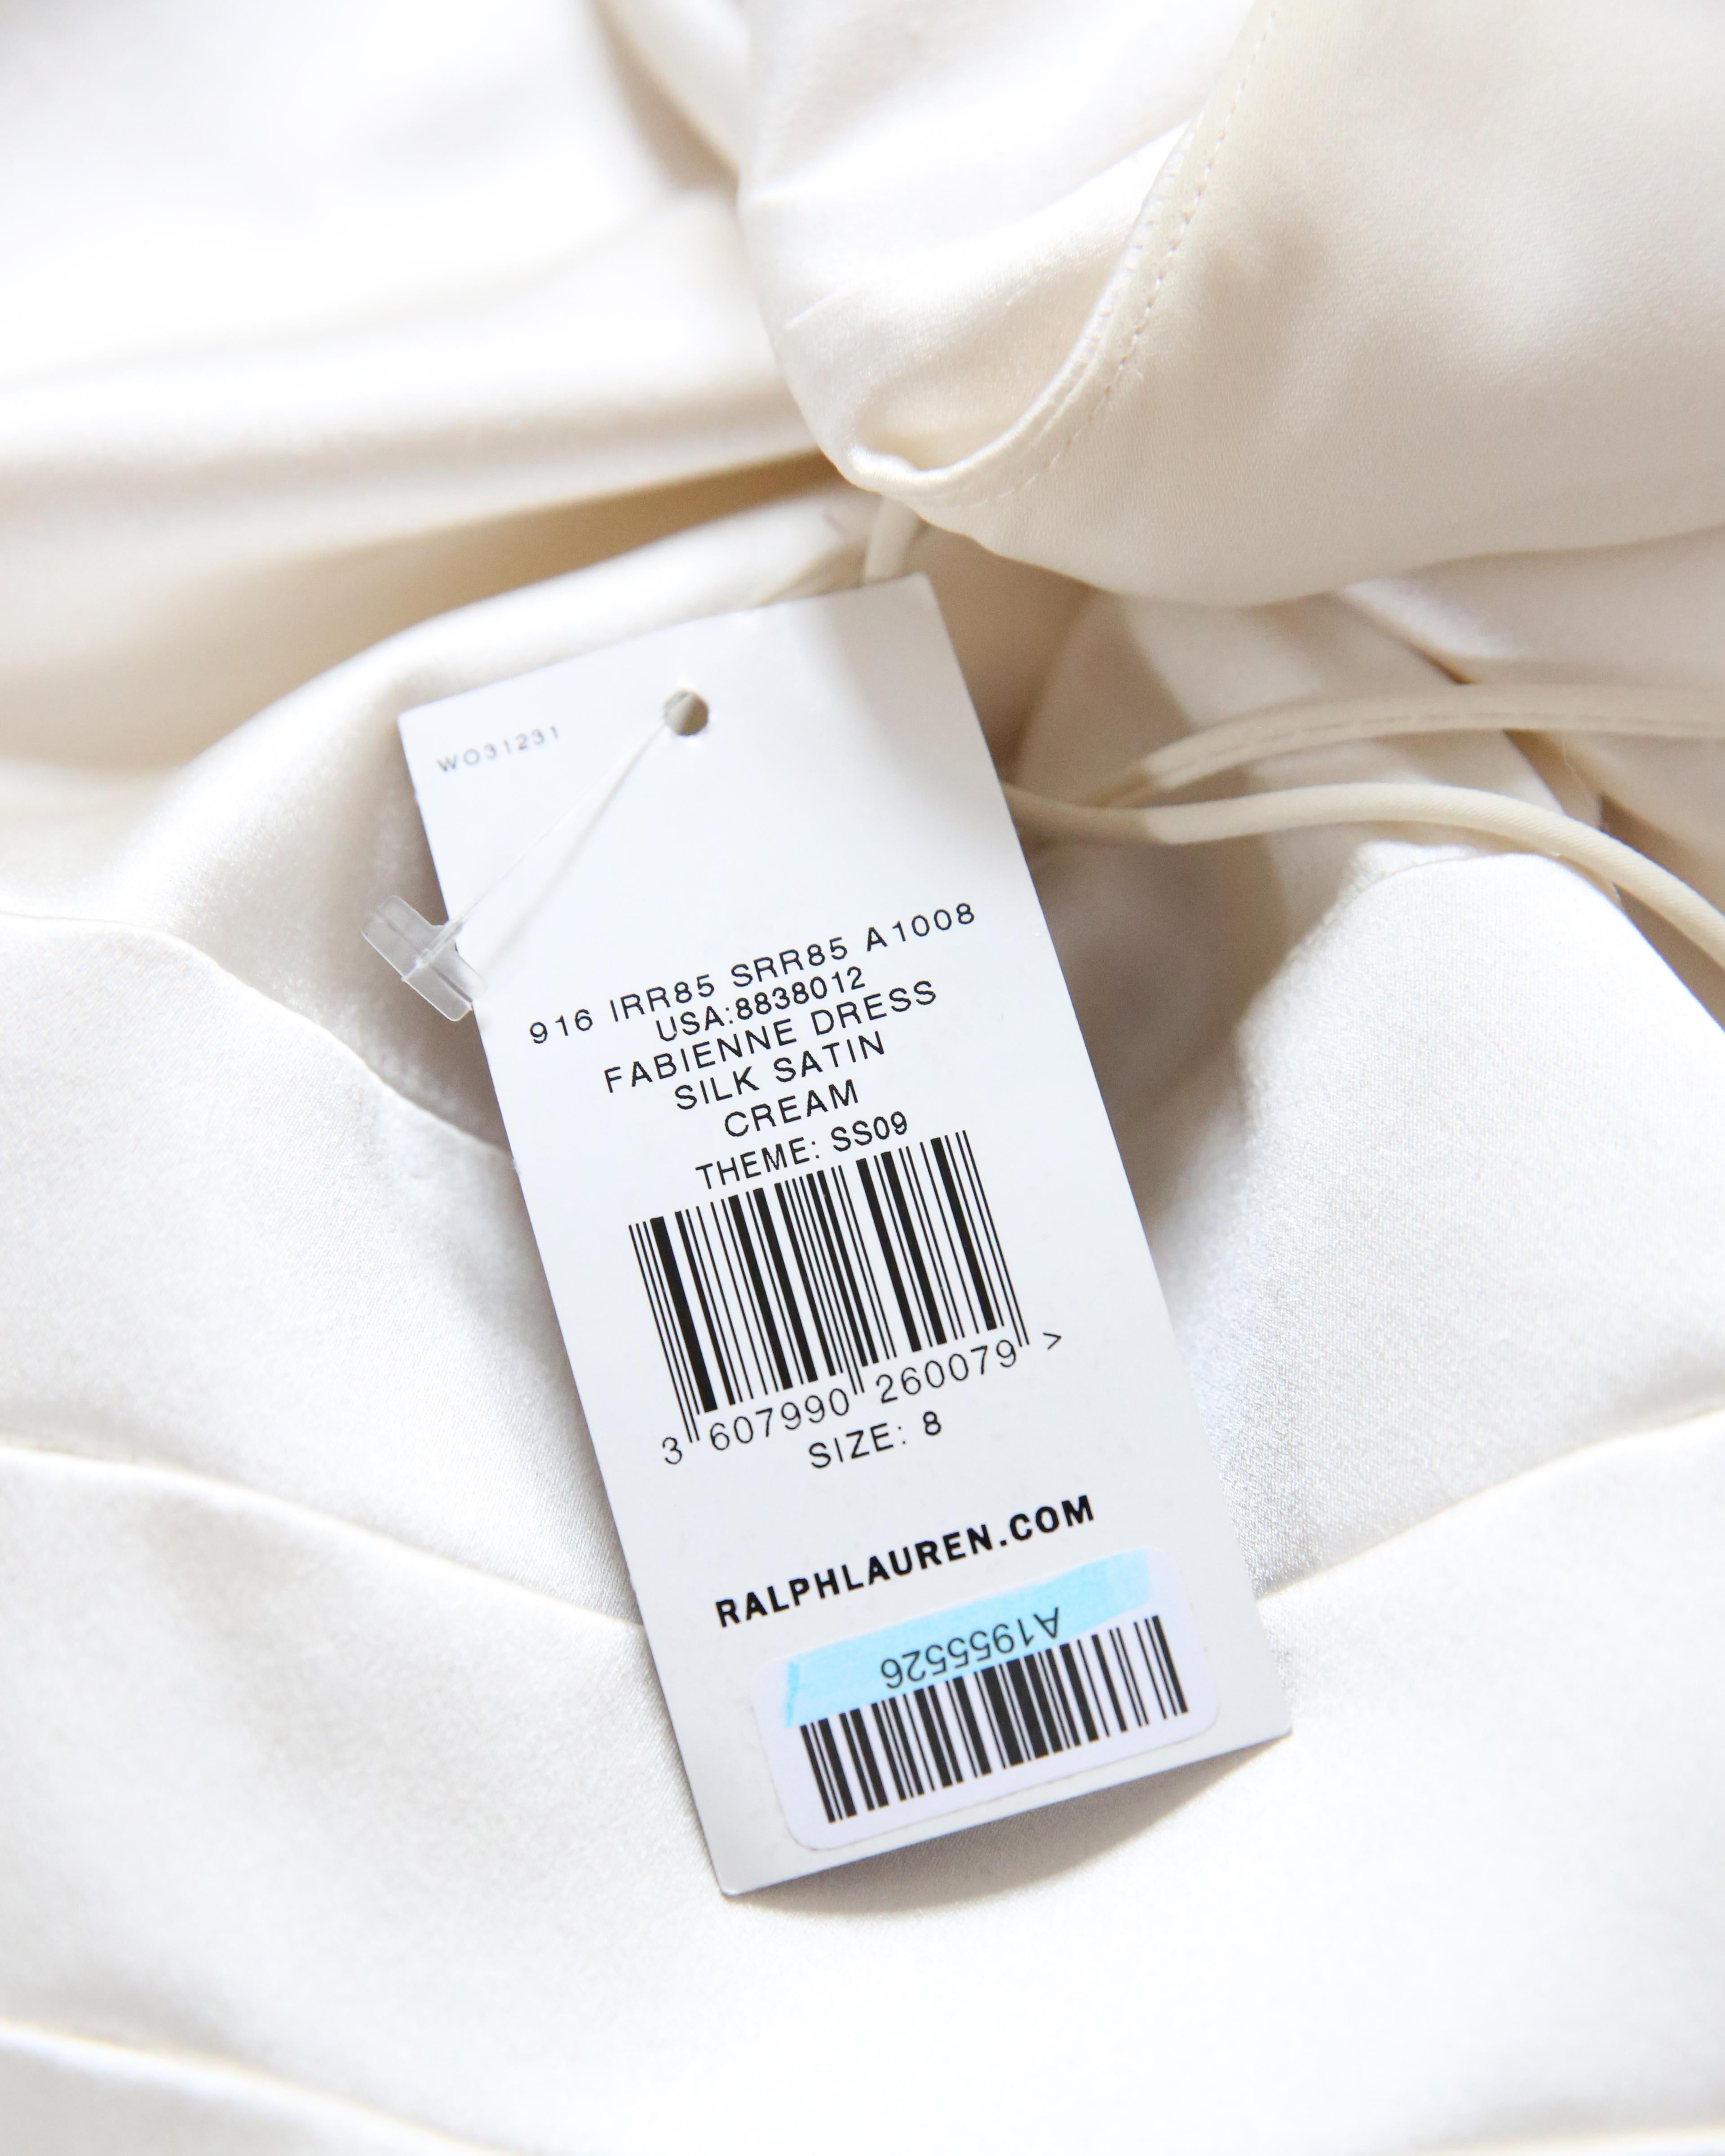 Ralph Lauren S/S 2009 white ivory silk plunging halter neck wedding gown dress For Sale 11